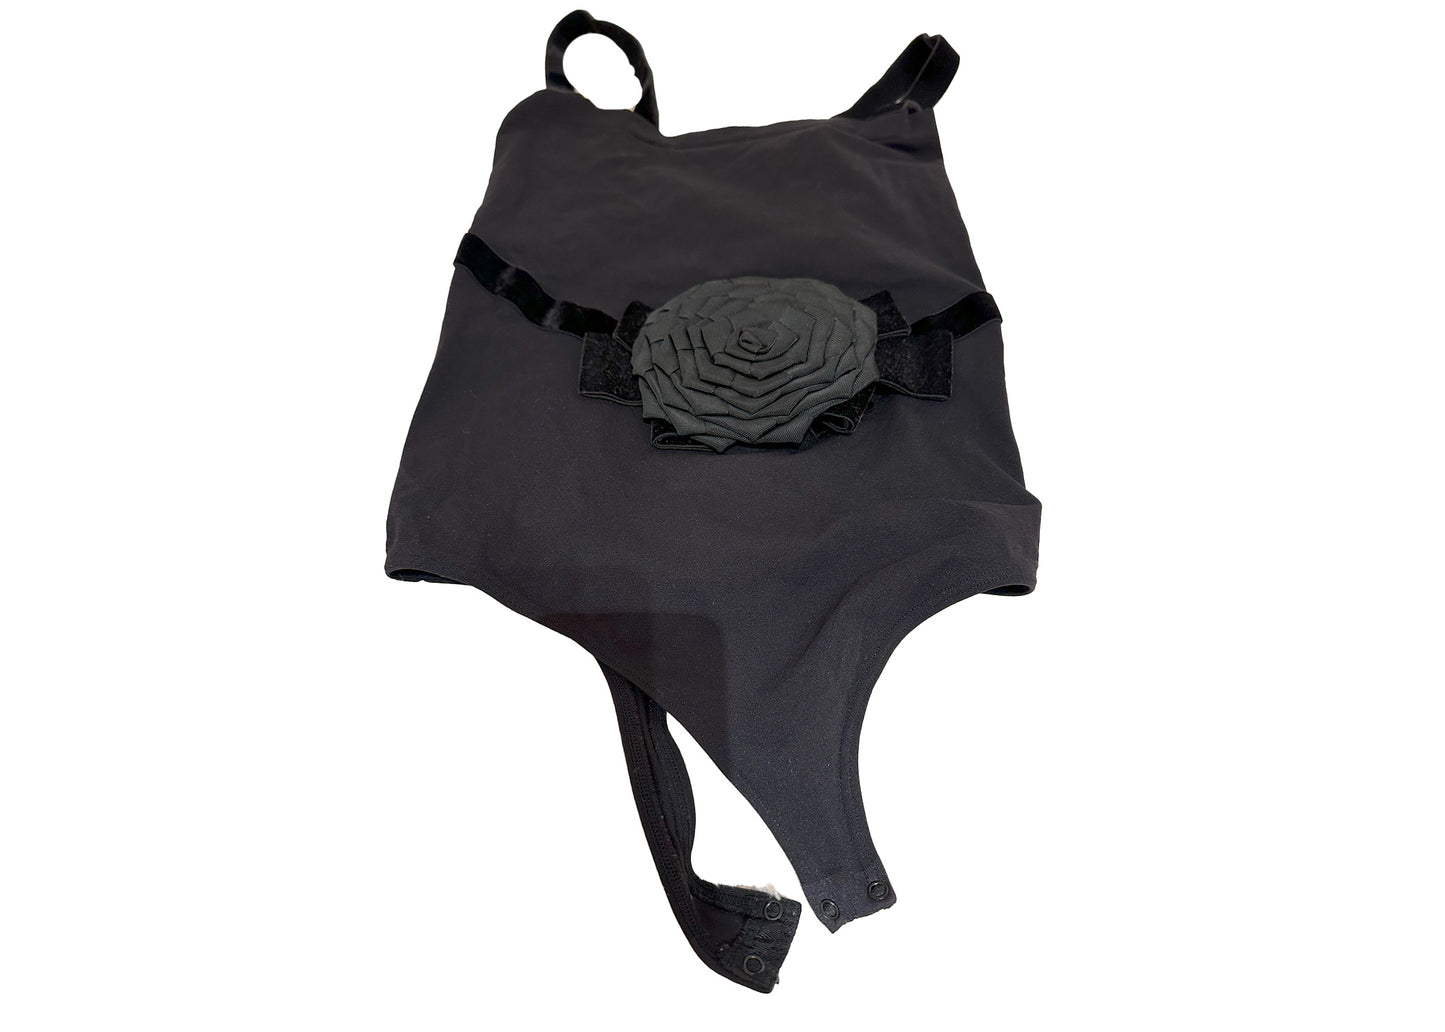 GIORGIO ARMANI Black Bodysuit with Flower